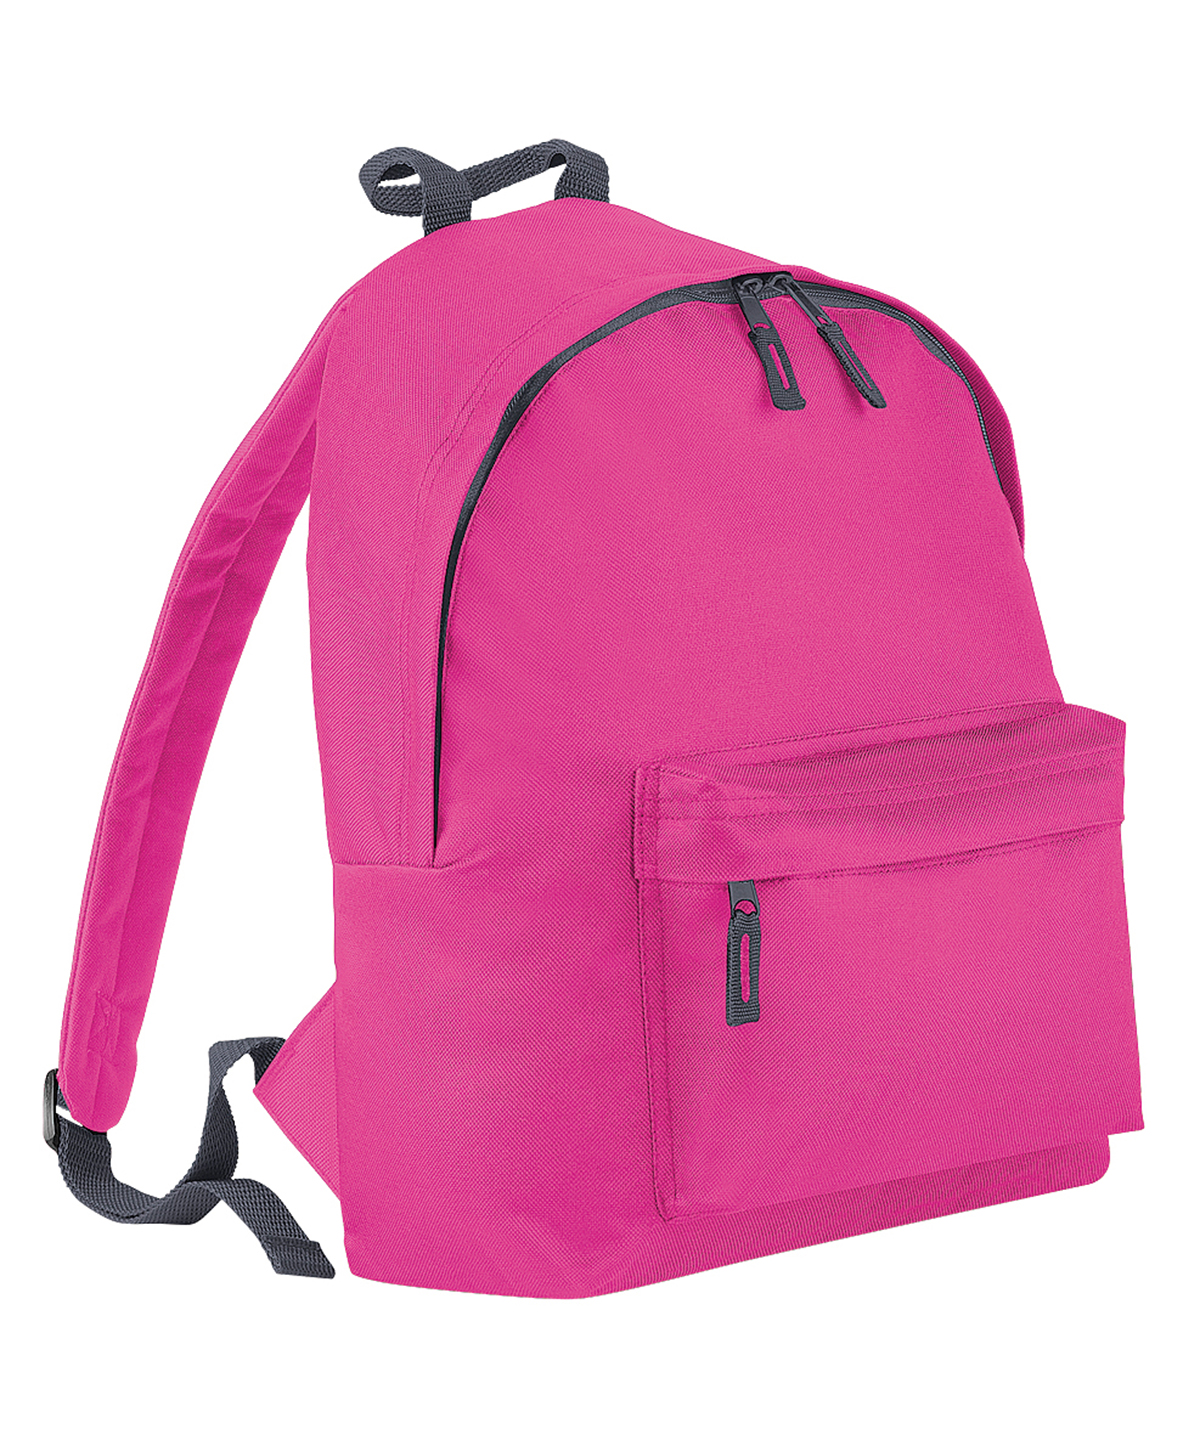 Junior Fashion Backpack Fuchsia/Graphite Grey Size One Size